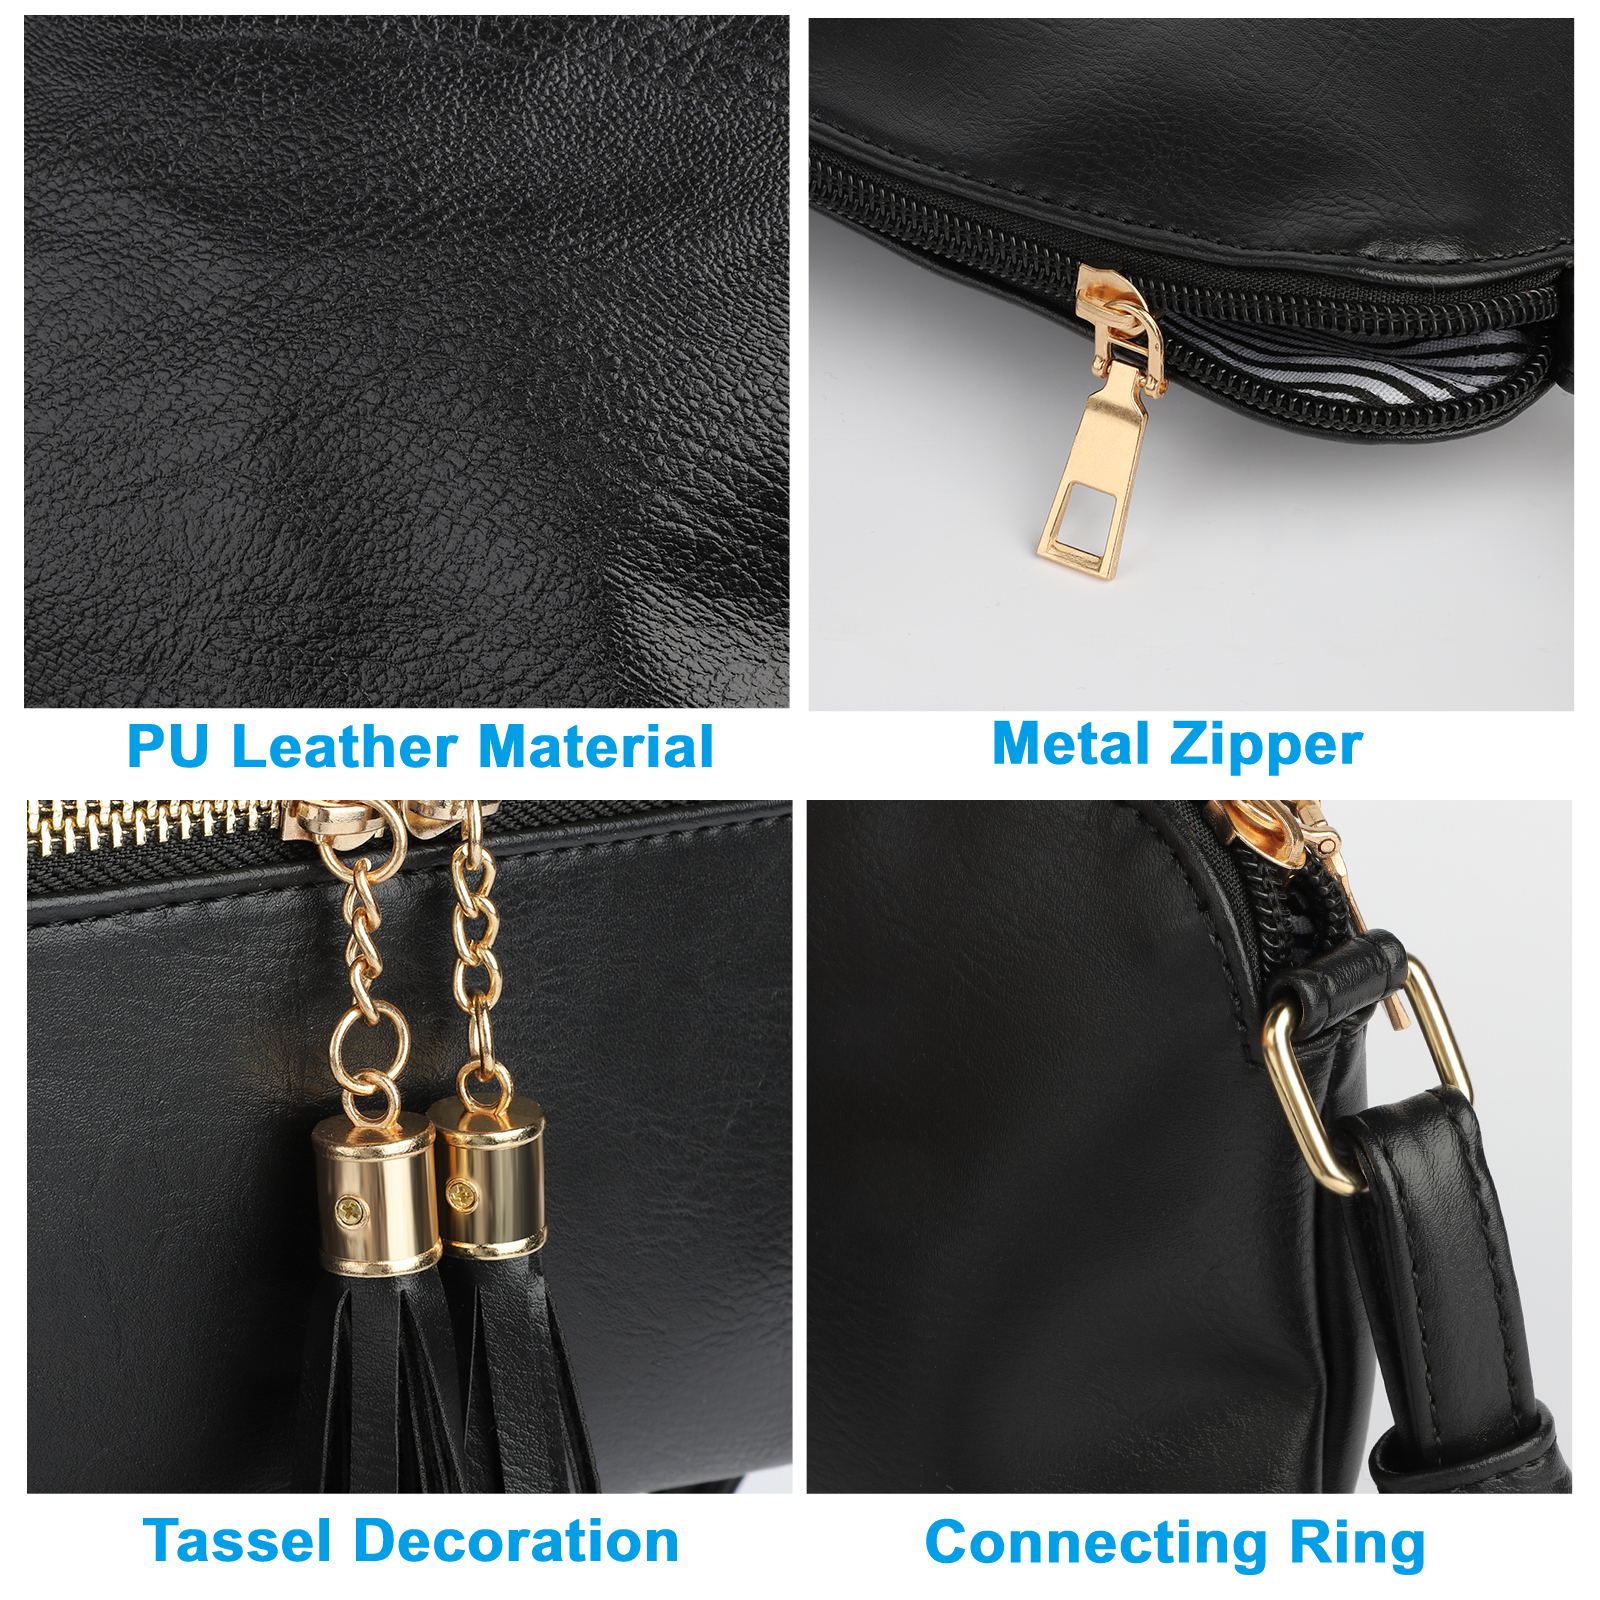 TSV Crossbody Bag for Women, PU Leather Shoulder Bag with Adjustable Strap, Ladies Large Capacity Tote Bag, Black - image 3 of 8